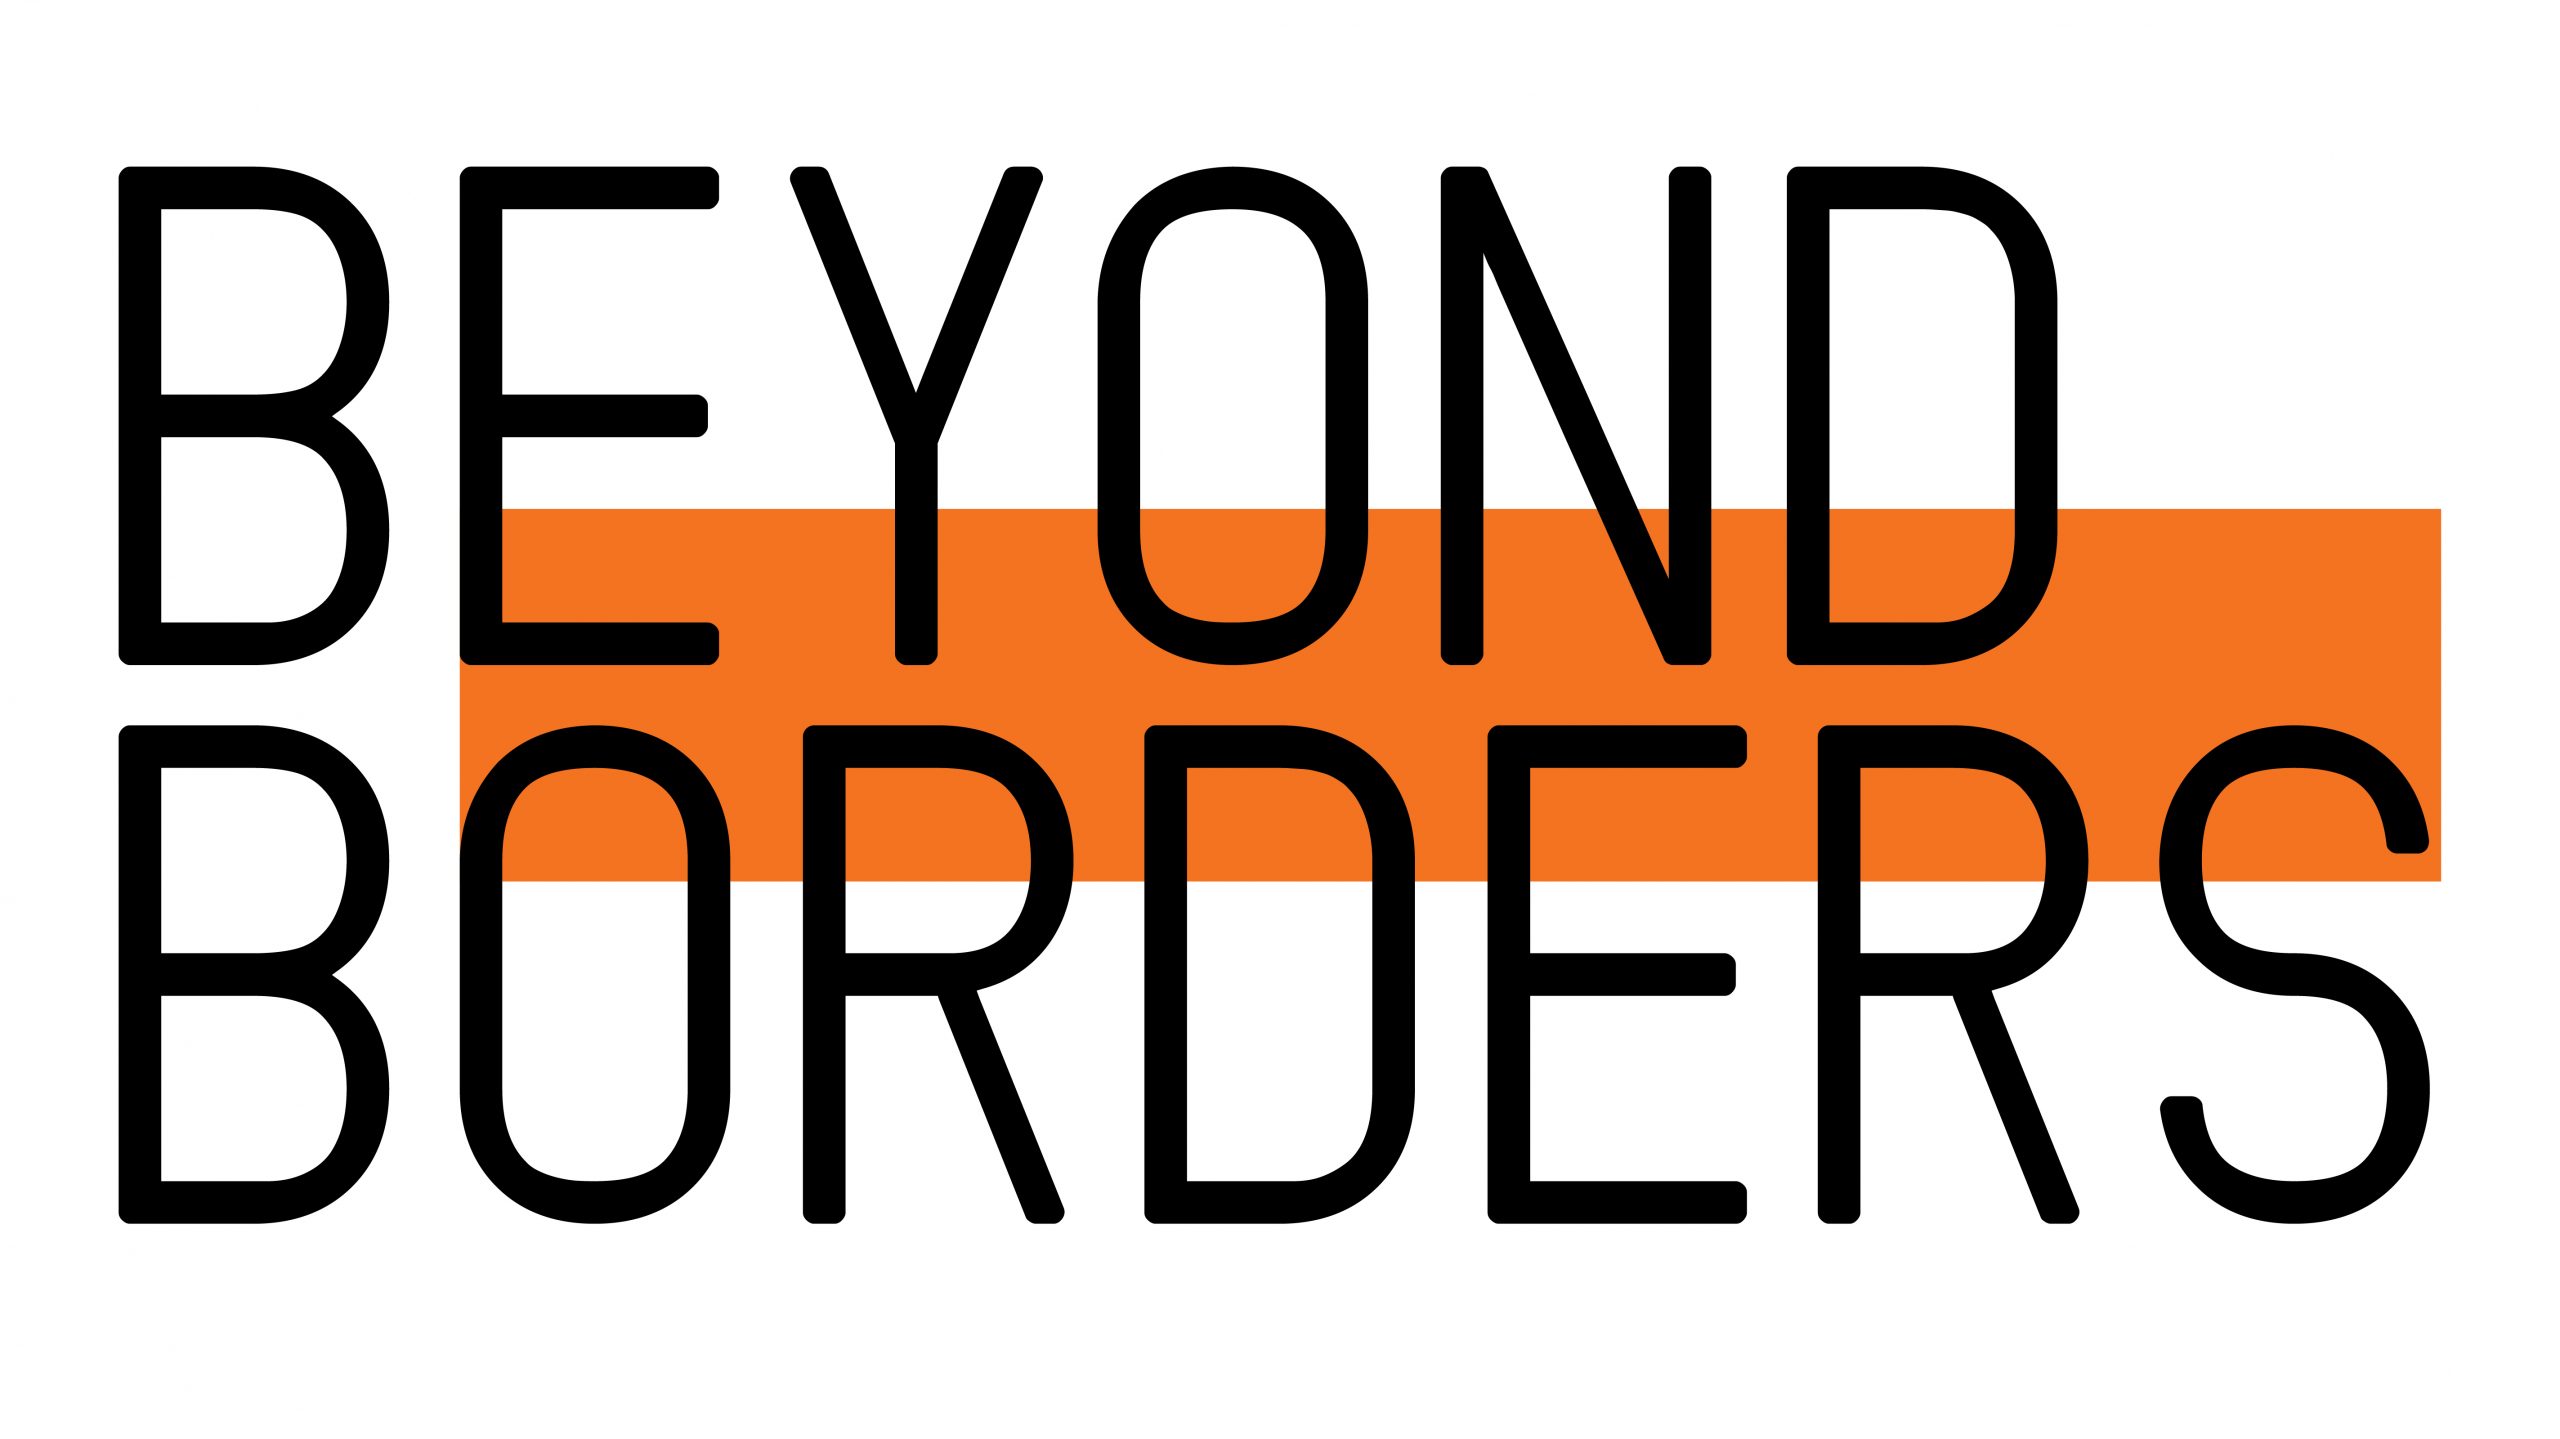 Beyond Borders text logo